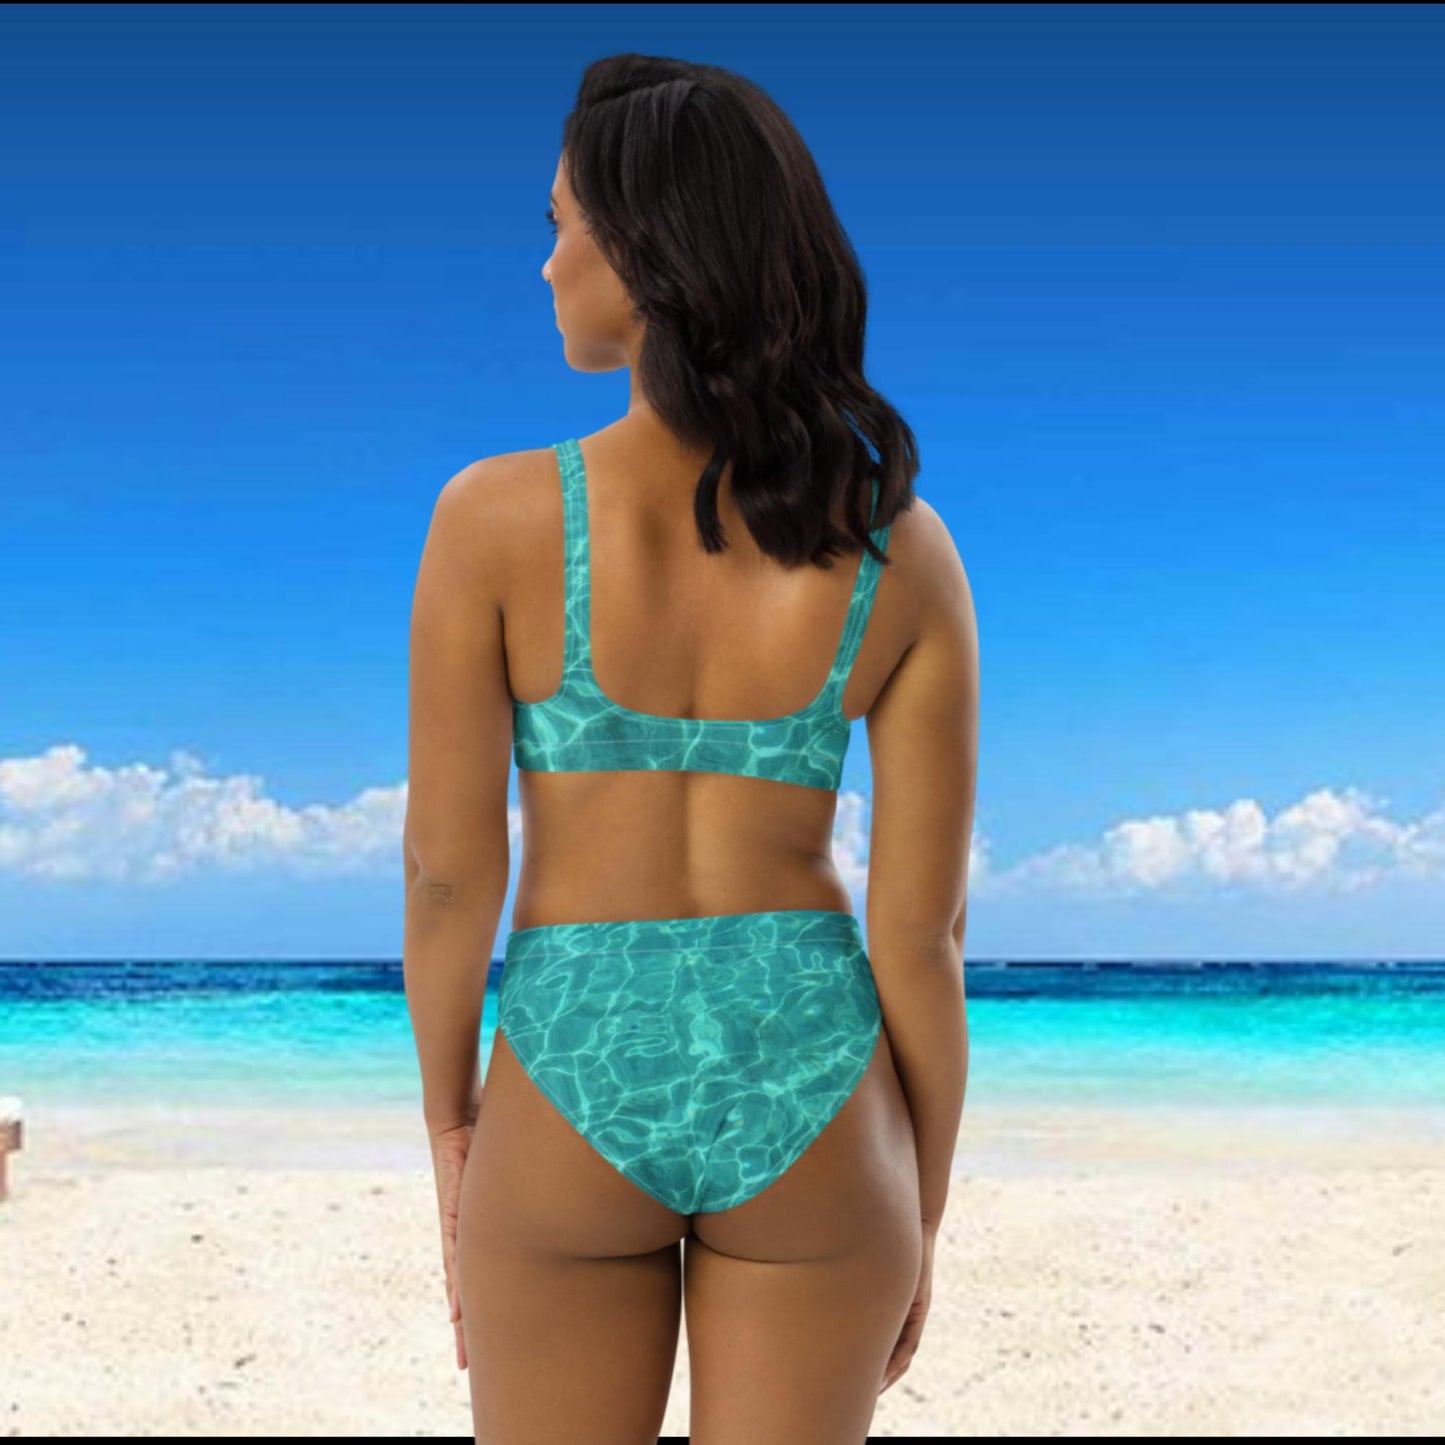 Caribbean Waters - Recycled high-waisted bikini